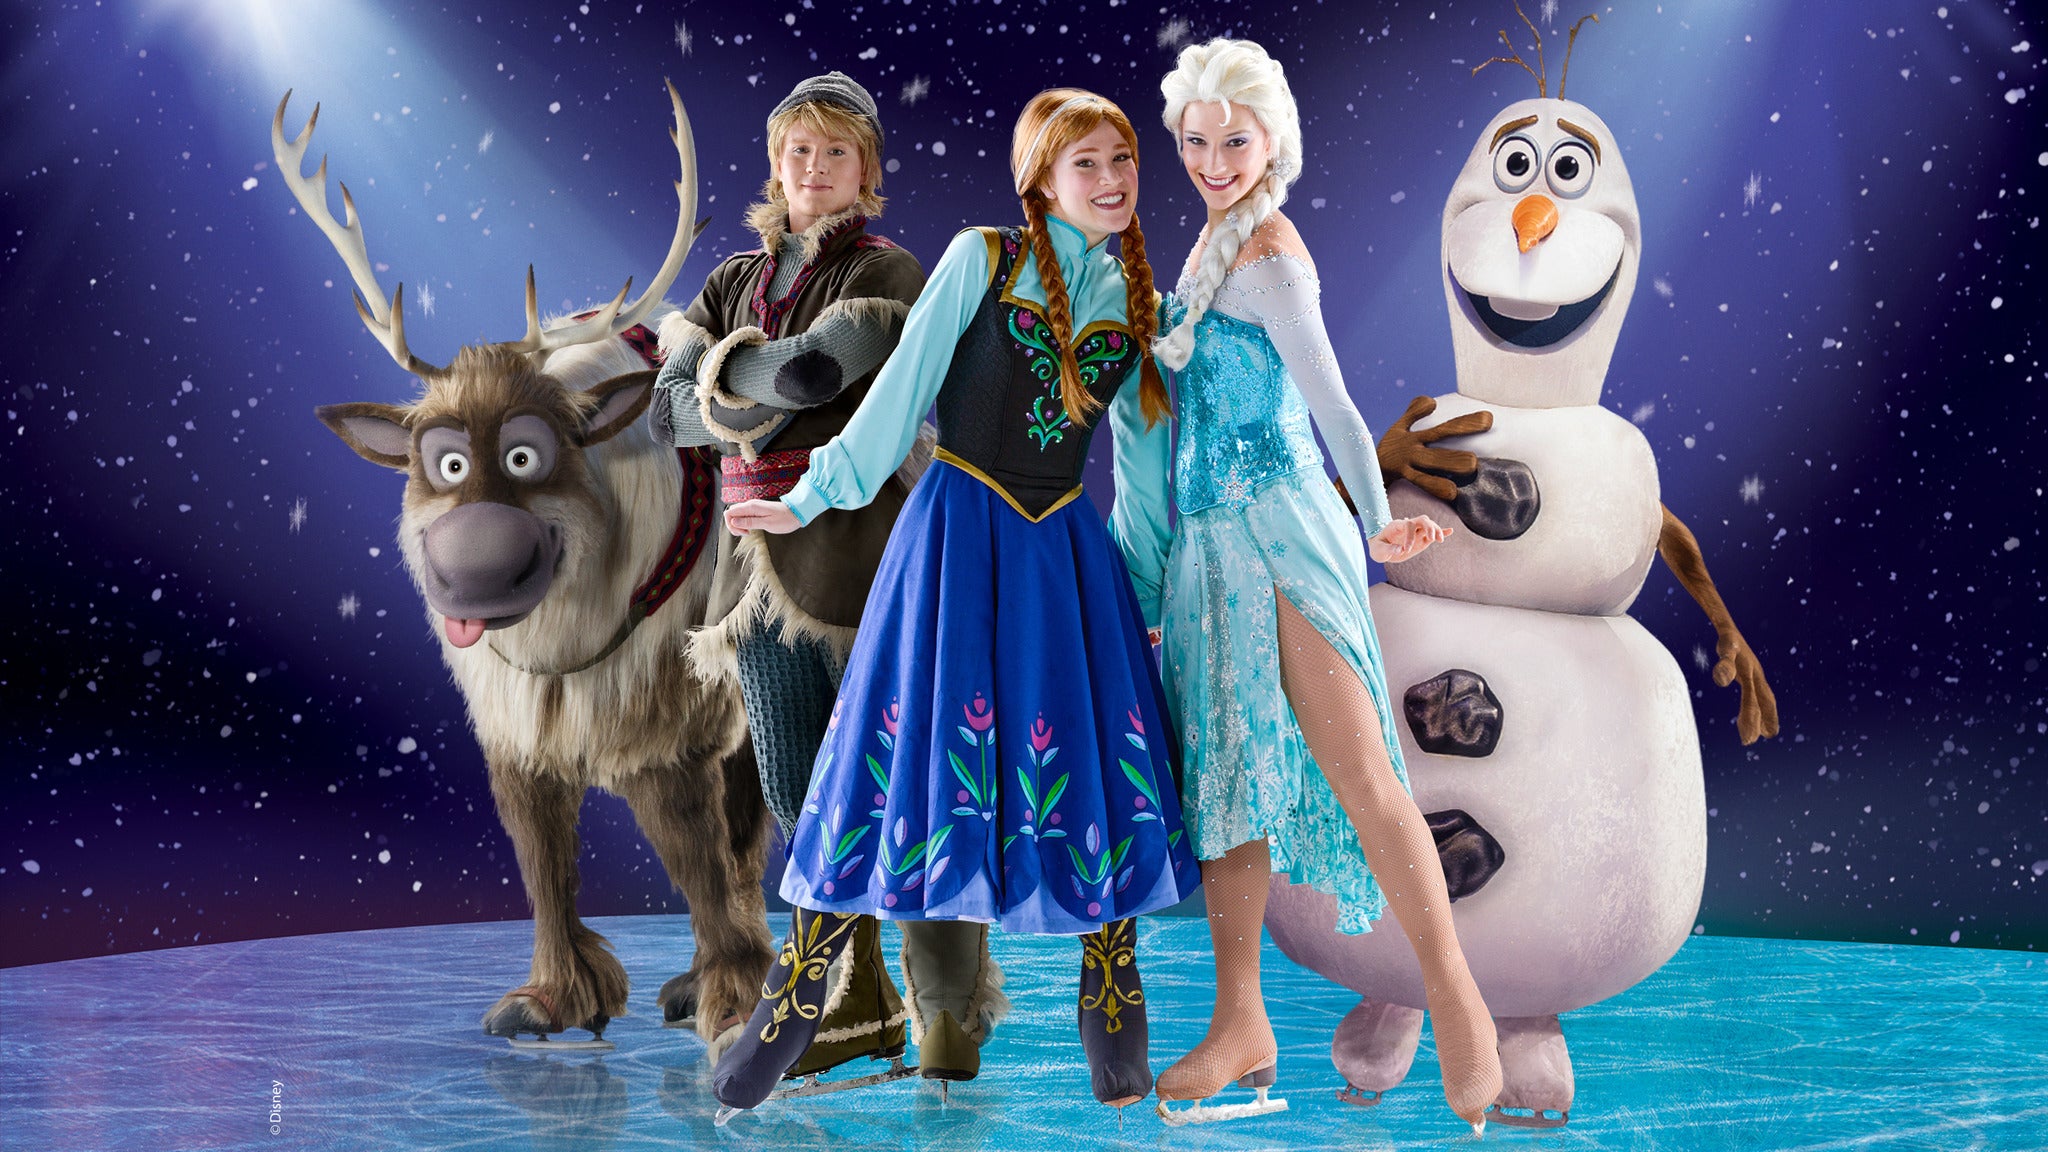 Disney On Ice presents Frozen in Newark promo photo for Ticketmaster / Venue presale offer code